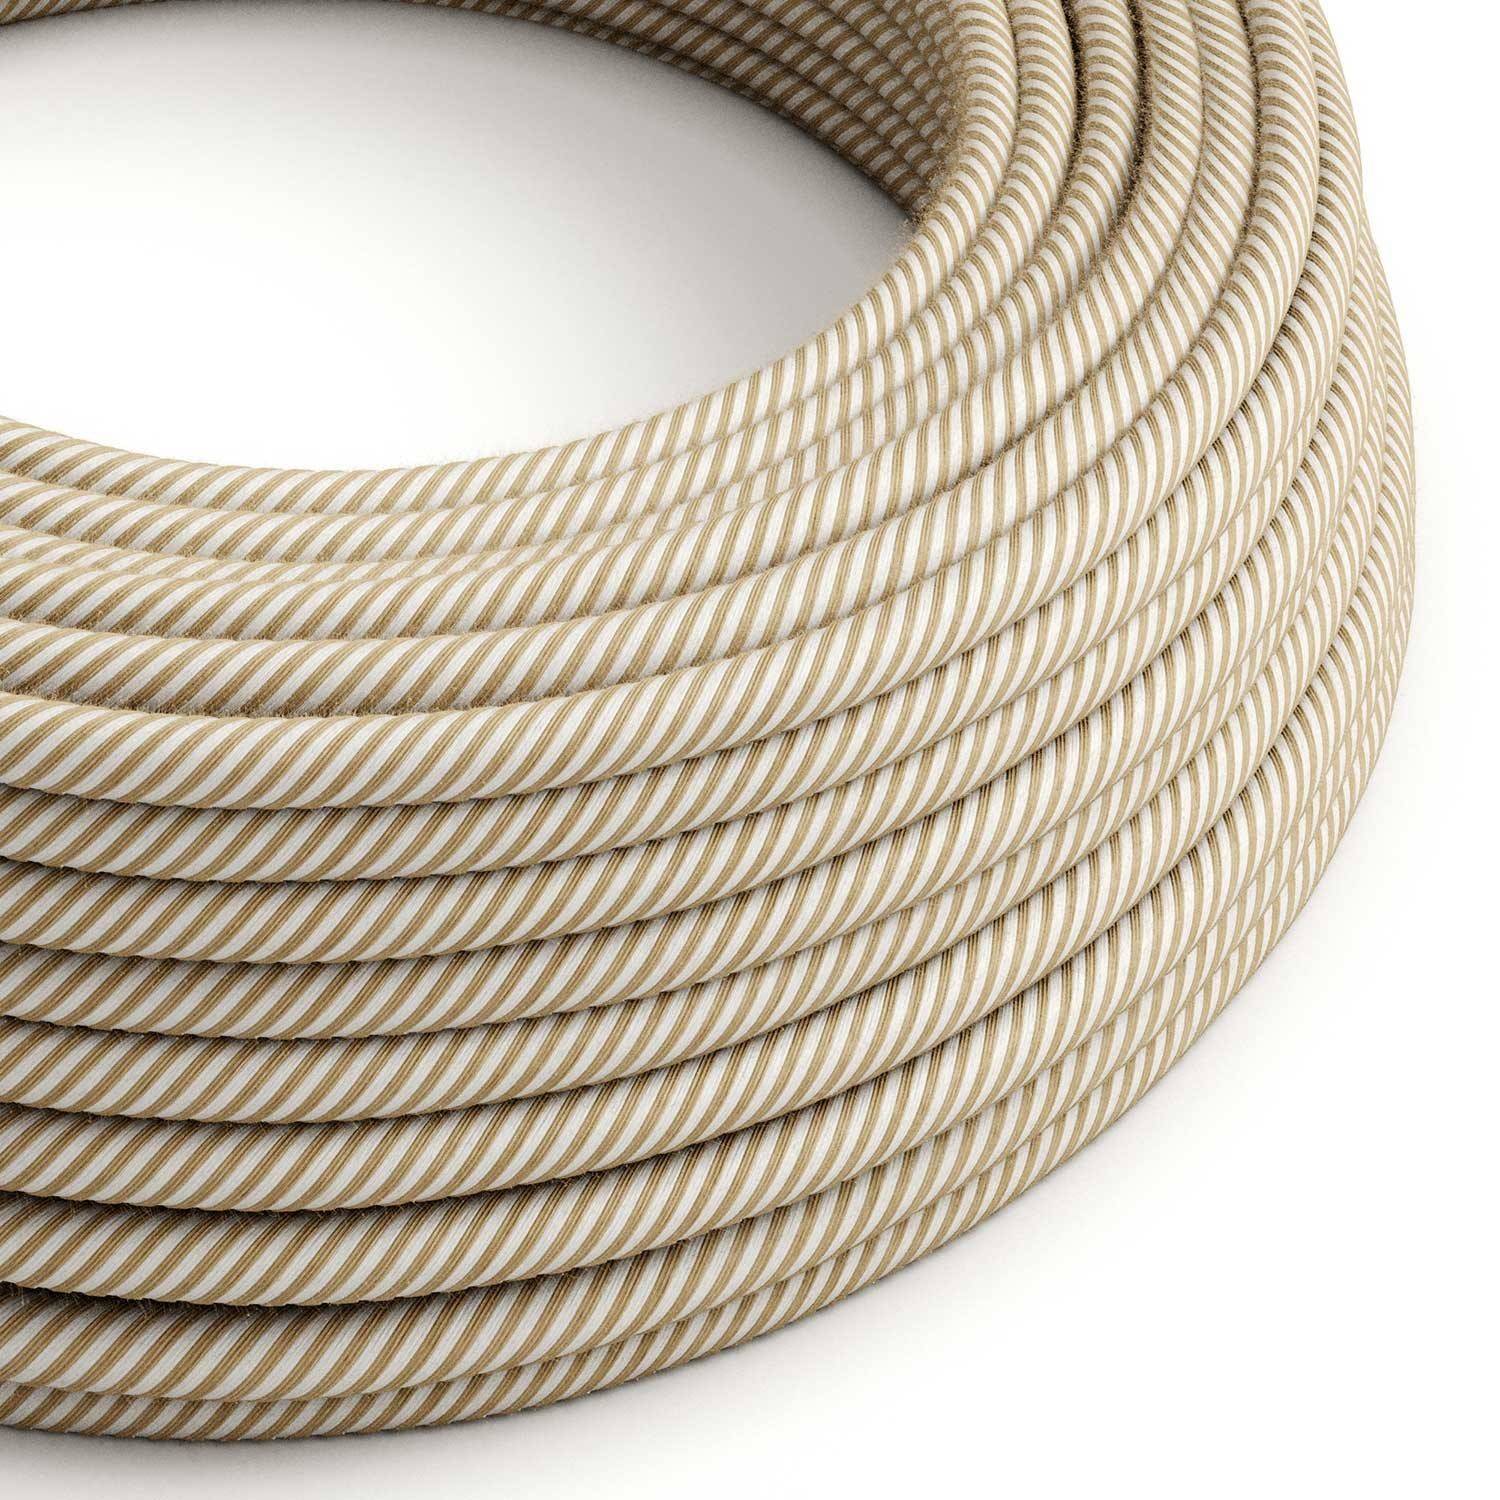 Cotton and Natural Jute Vertigo Textile Cable - The Original Creative-Cables - ERN07 round 2x0.75mm / 3x0.75mm